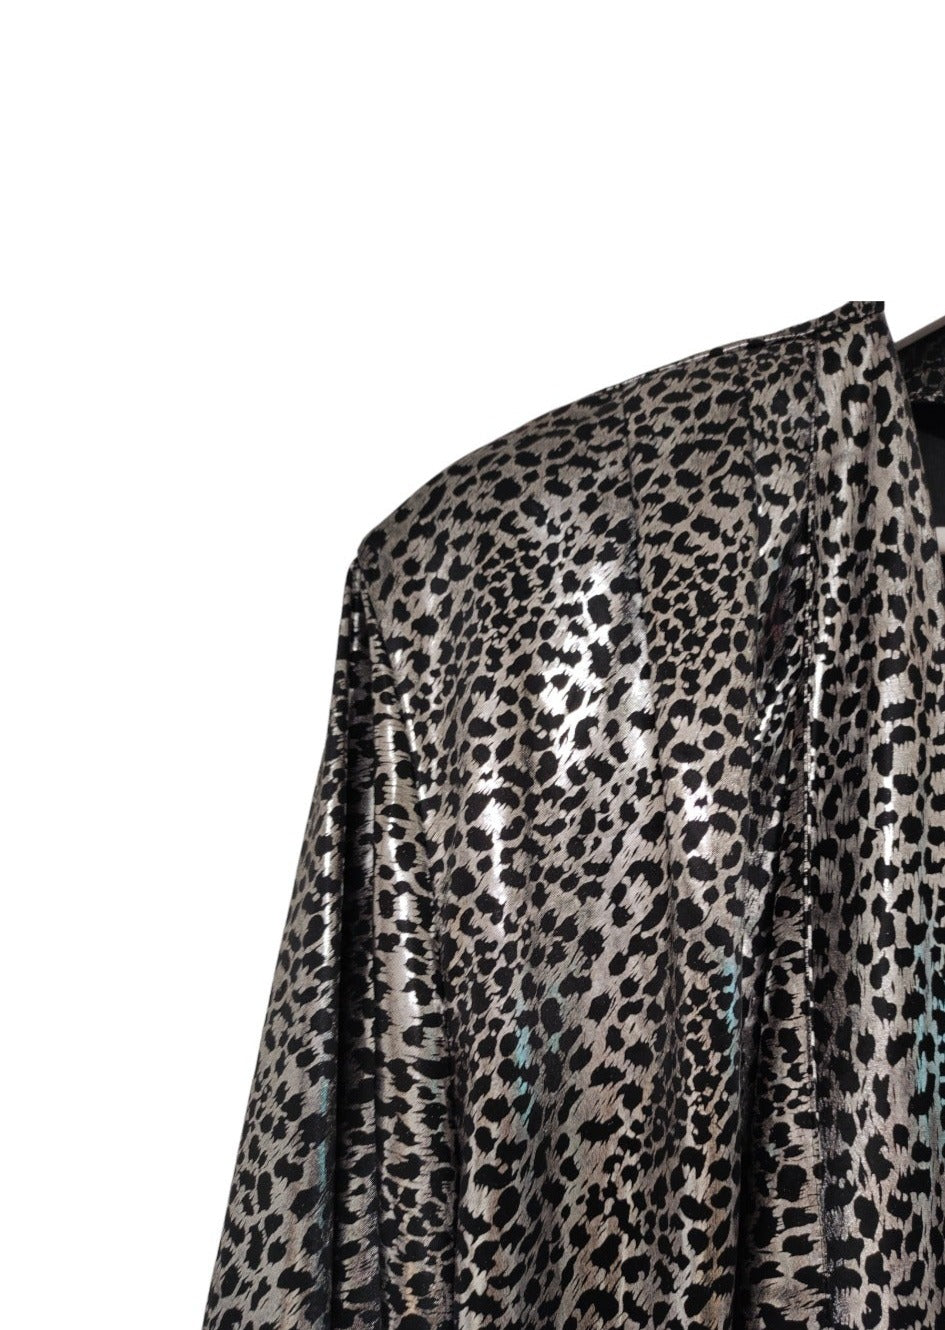 Vintage, Lurex, Γυναικεία Μπλούζα JOY σε Ασημι-Μαύρο χρώμα (XL)